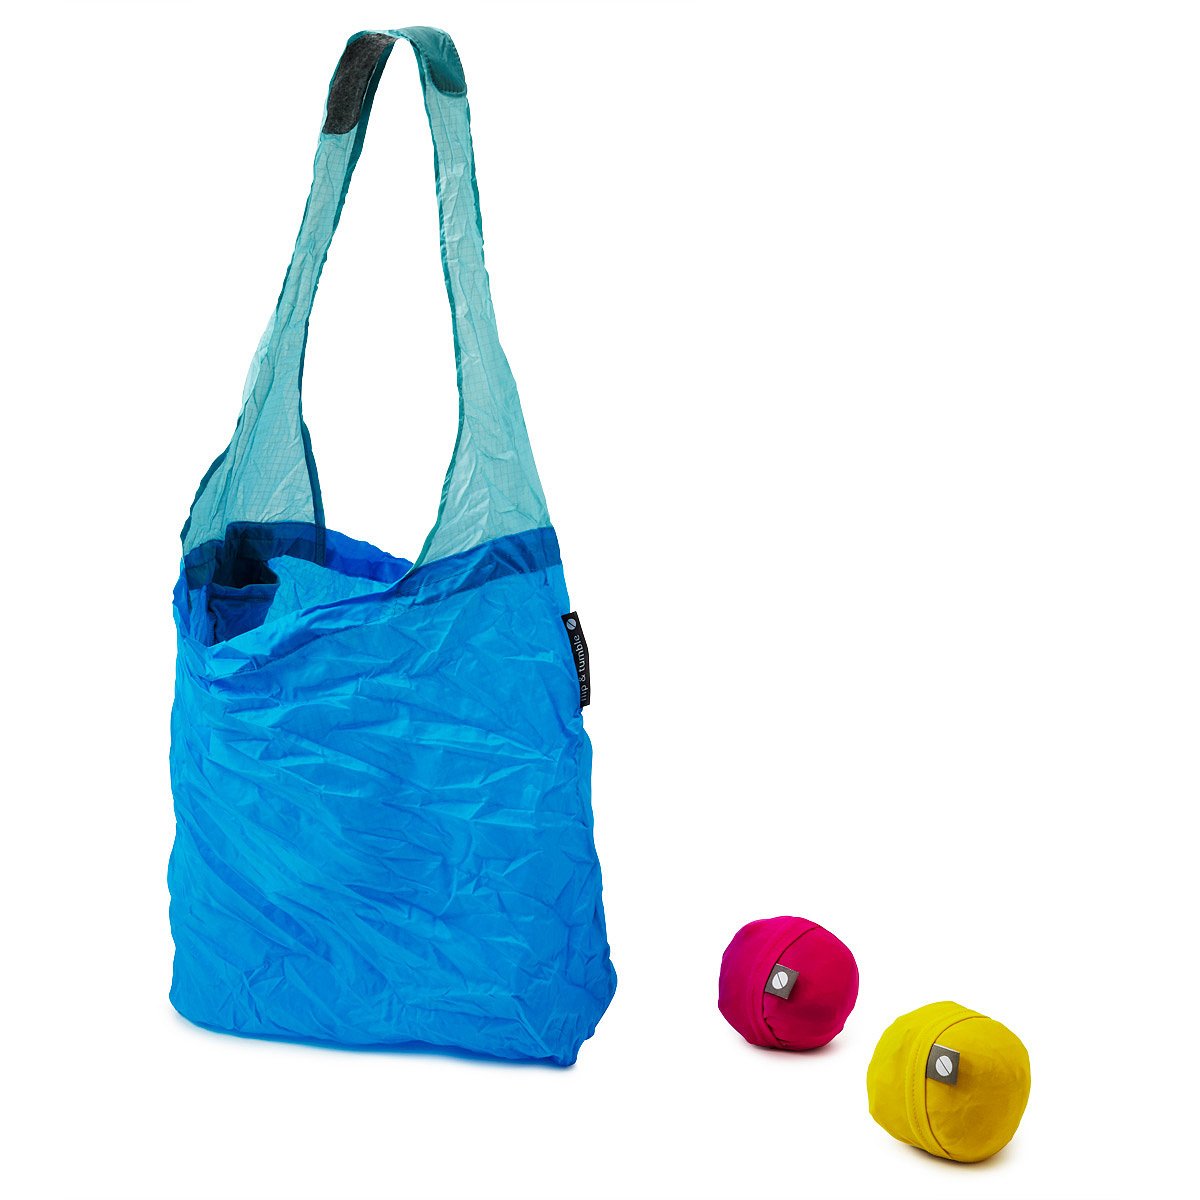 Flip & Tumble Reusable Shopping Bags | reusable grocery bag, nylon ...